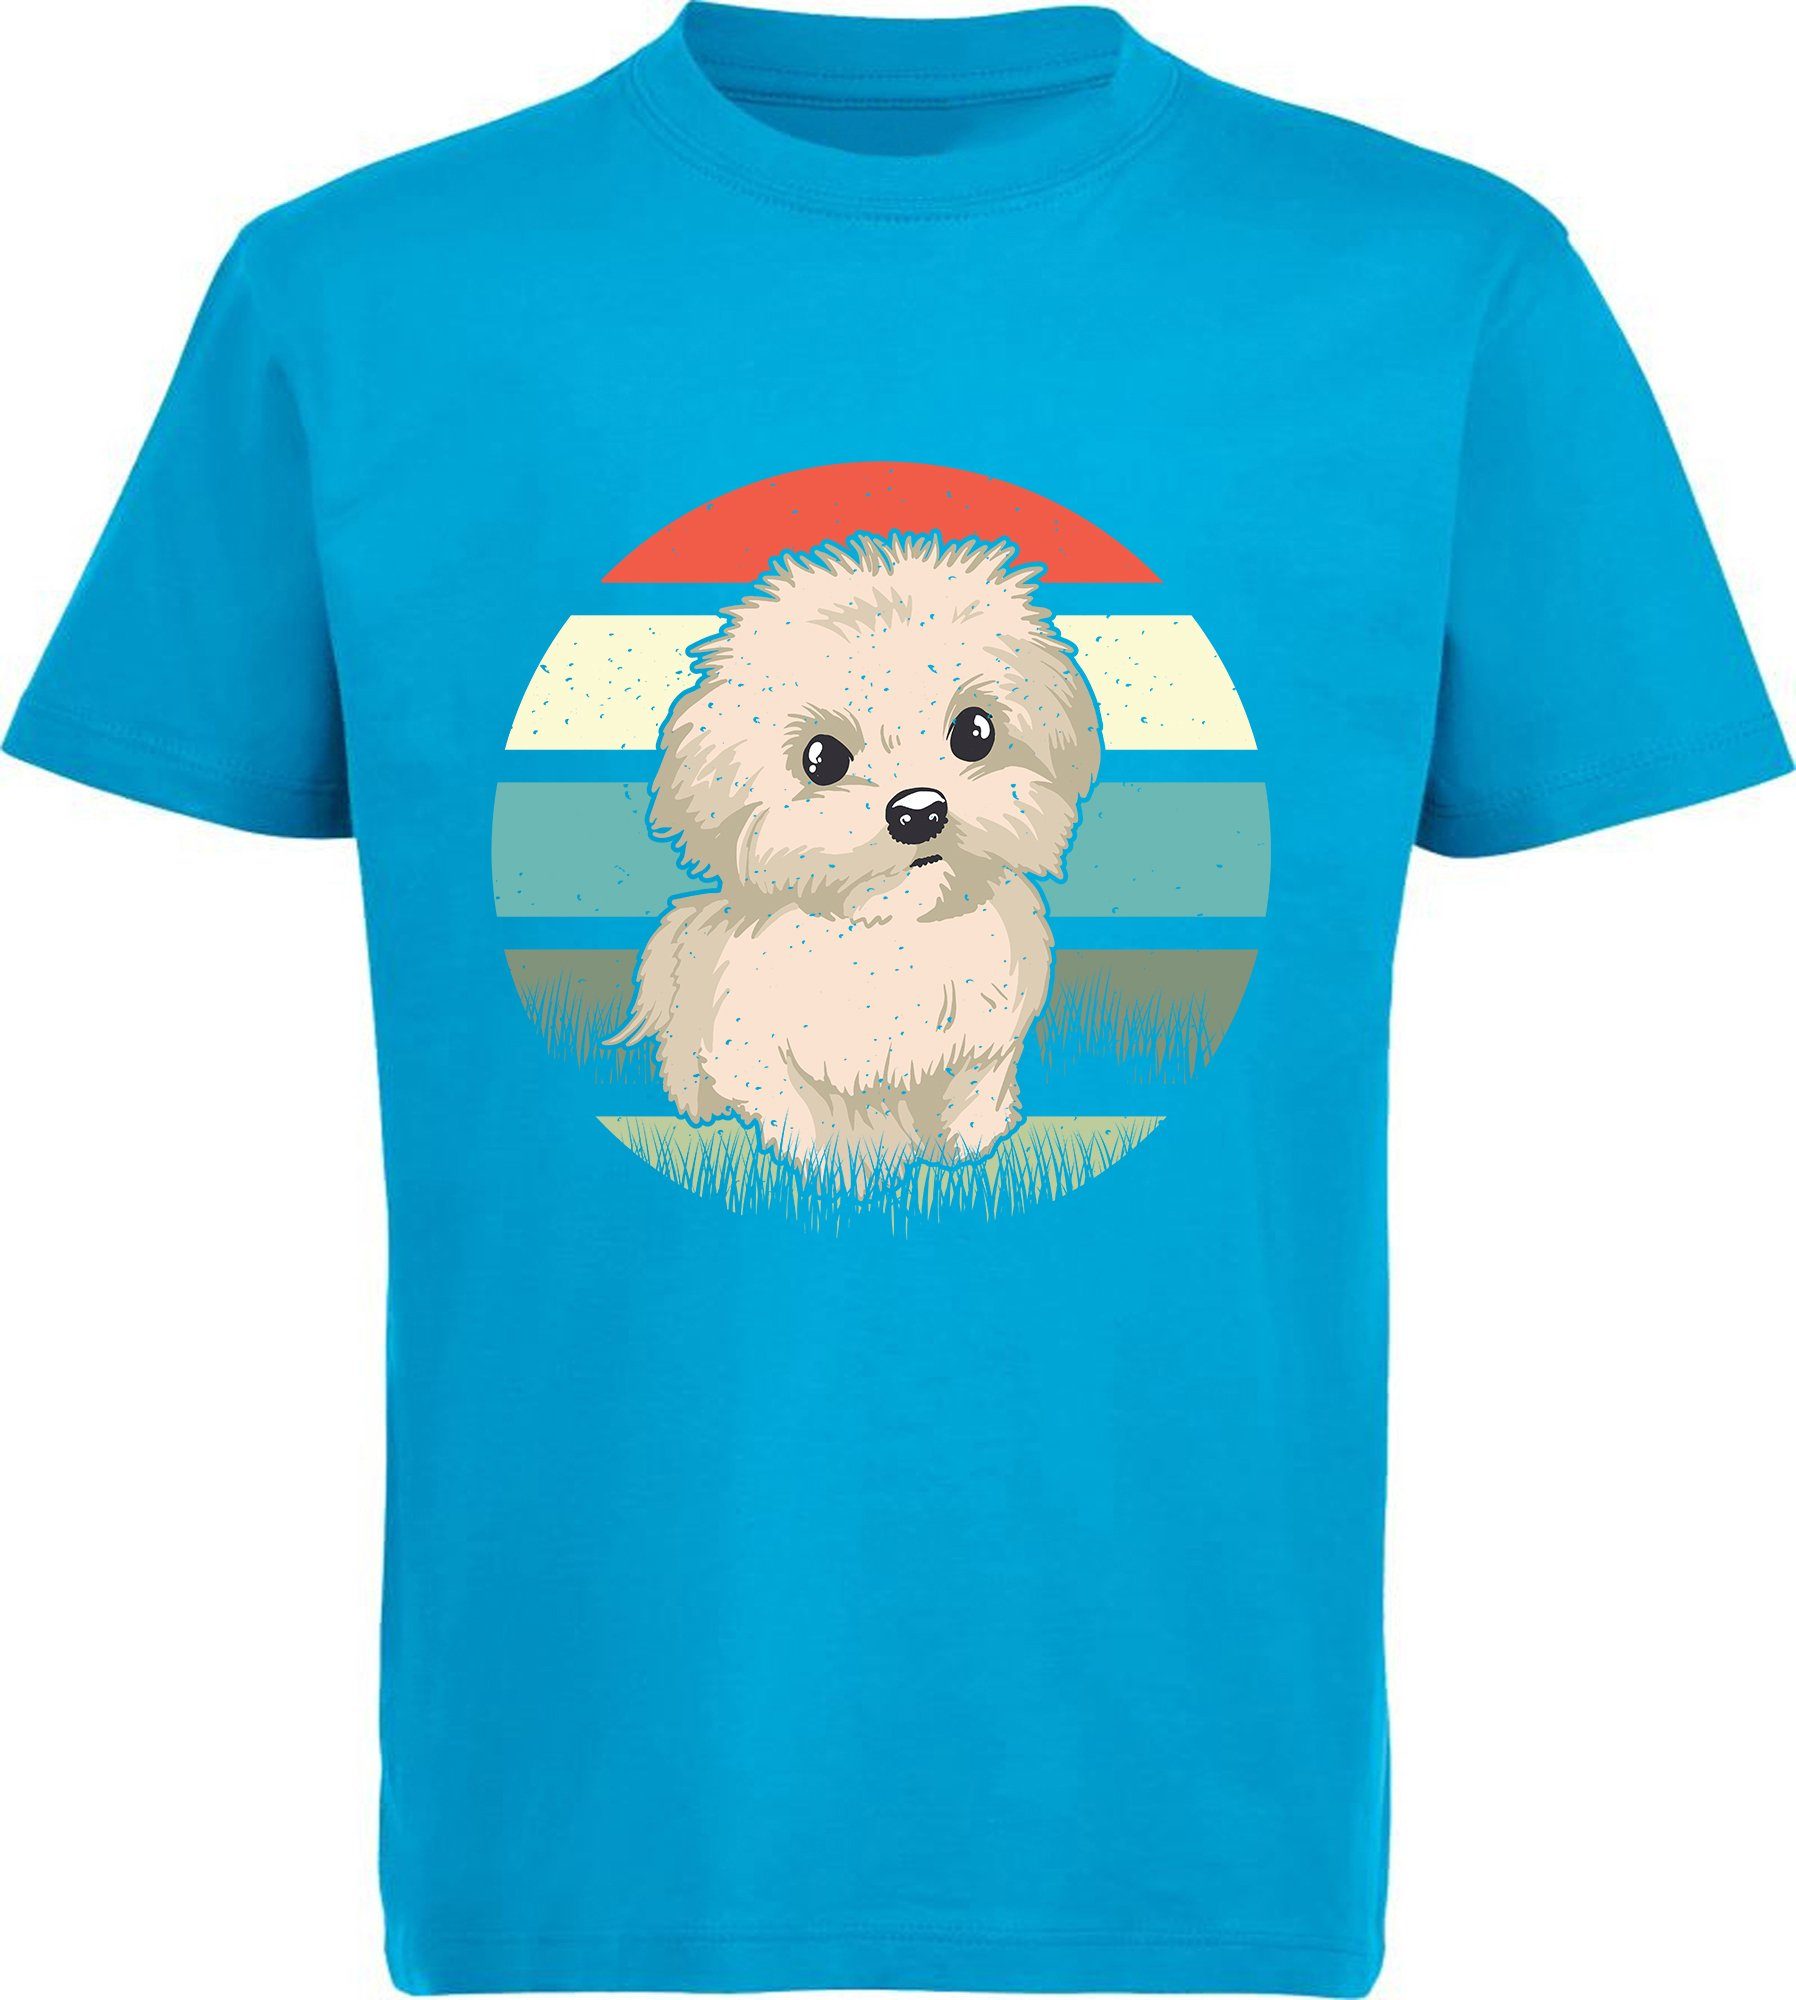 MyDesign24 Print-Shirt Kinder Hunde T-Shirt bedruckt - Retro Malteser Welpen Baumwollshirt mit Aufdruck, i242 aqua blau